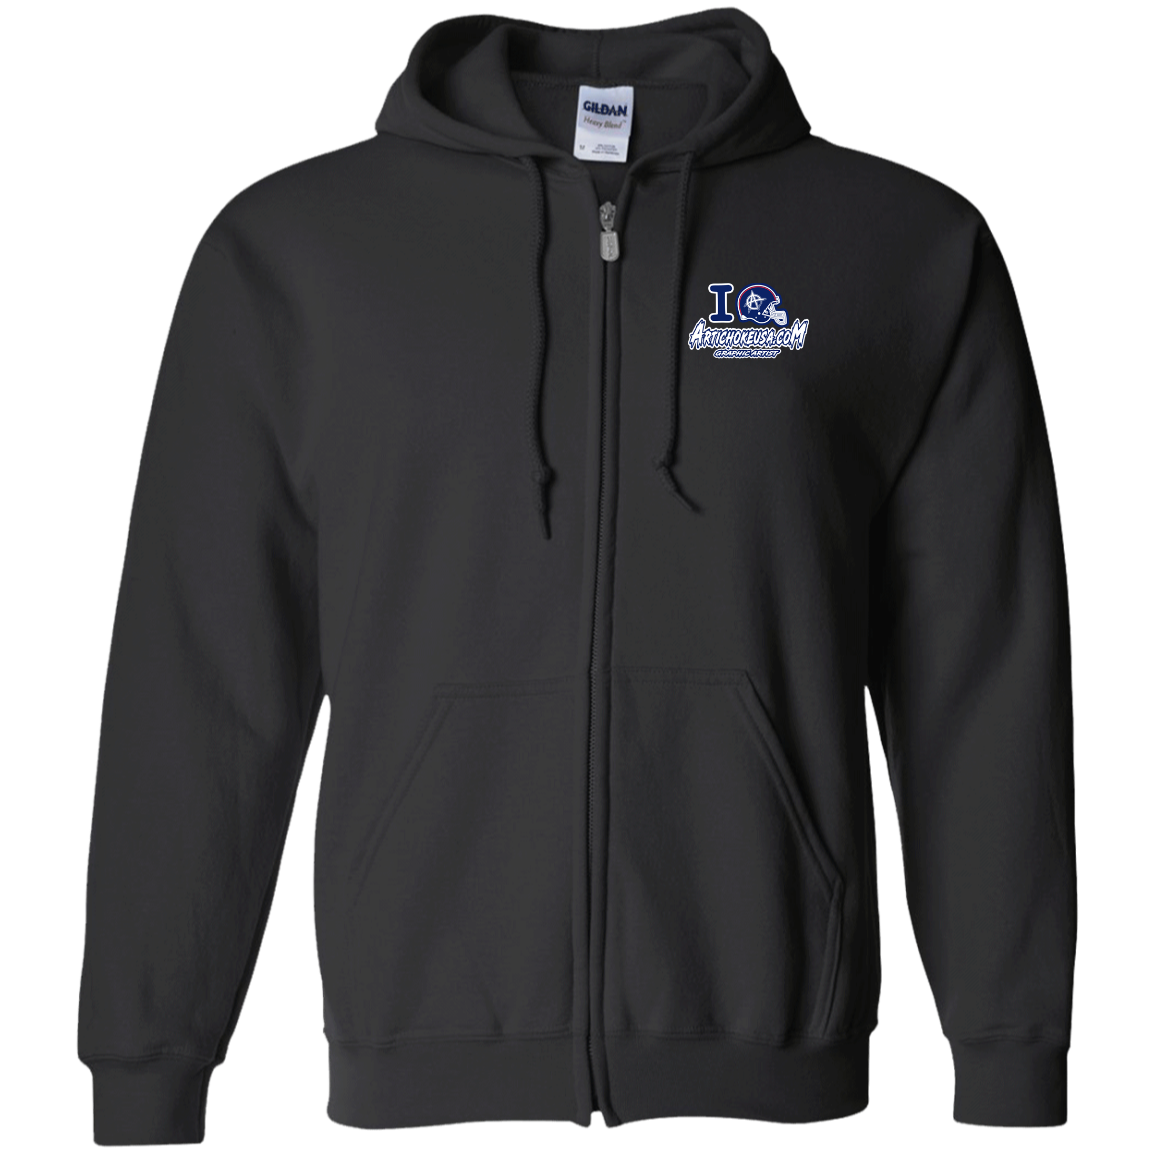 ArtichokeUSA Custom Design. New England Deflatriots. New England Patriots Parody. Zip Up Hooded Sweatshirt